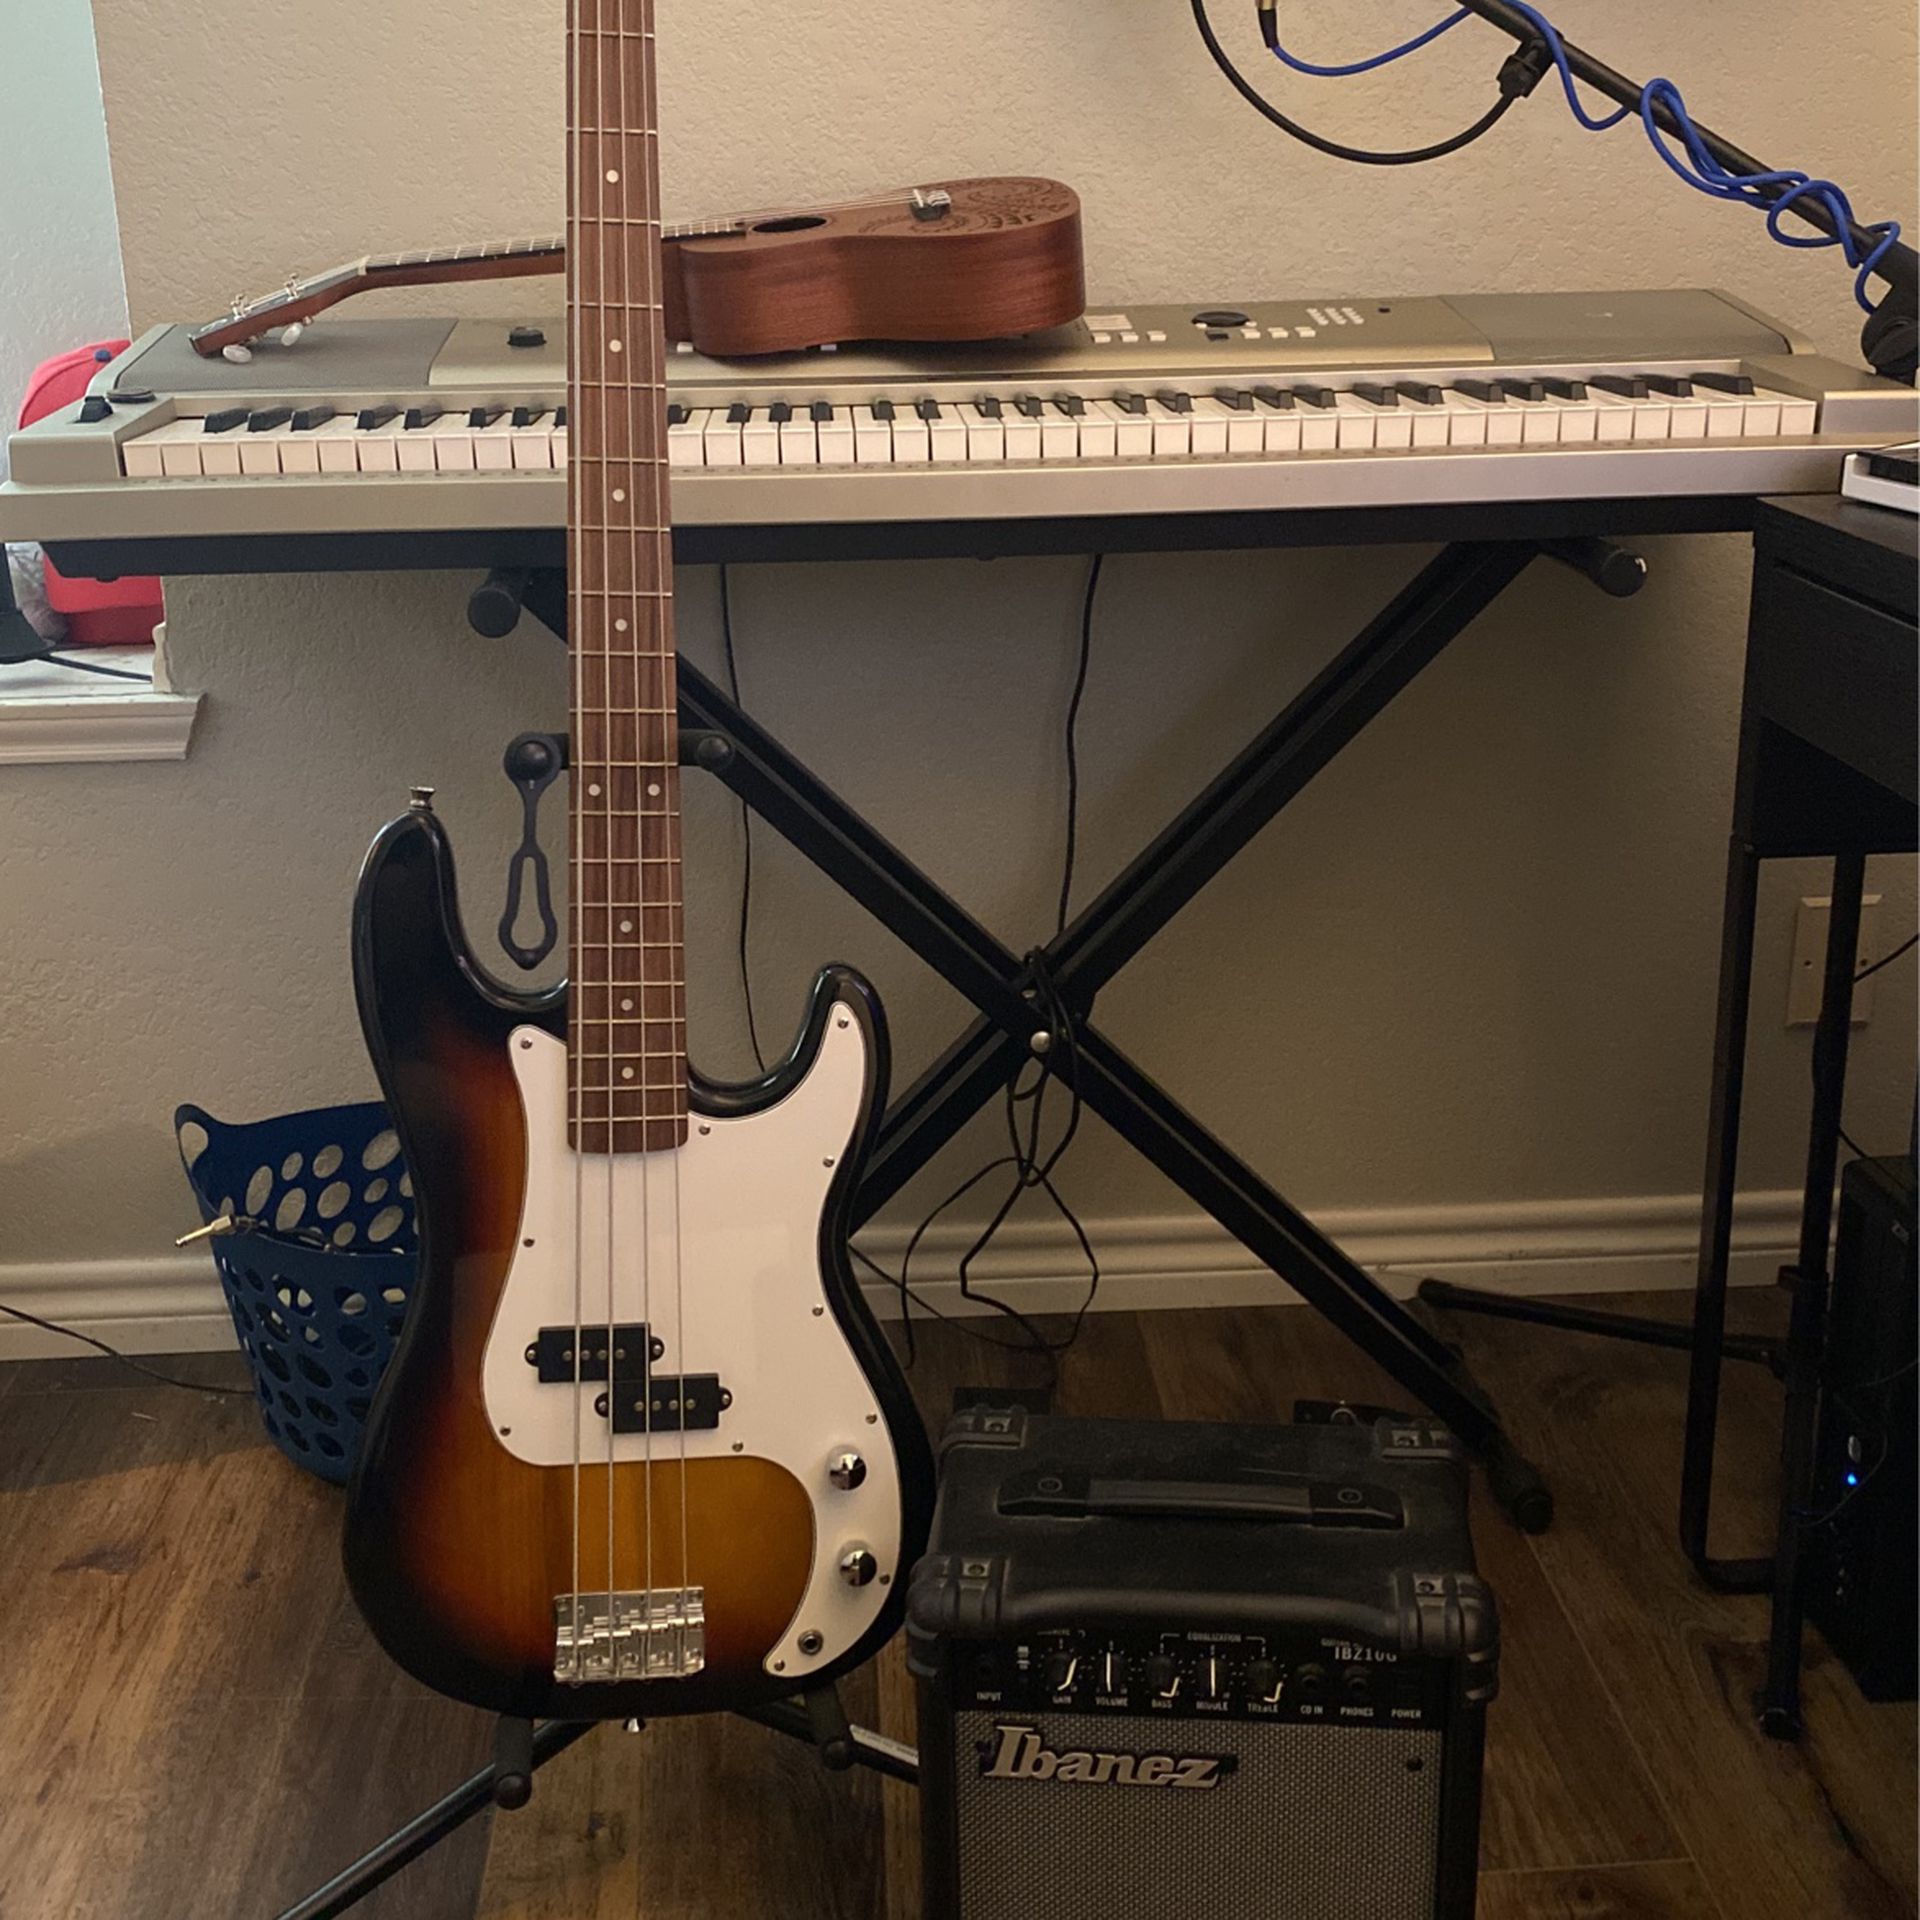 Bass Guitar And Amp